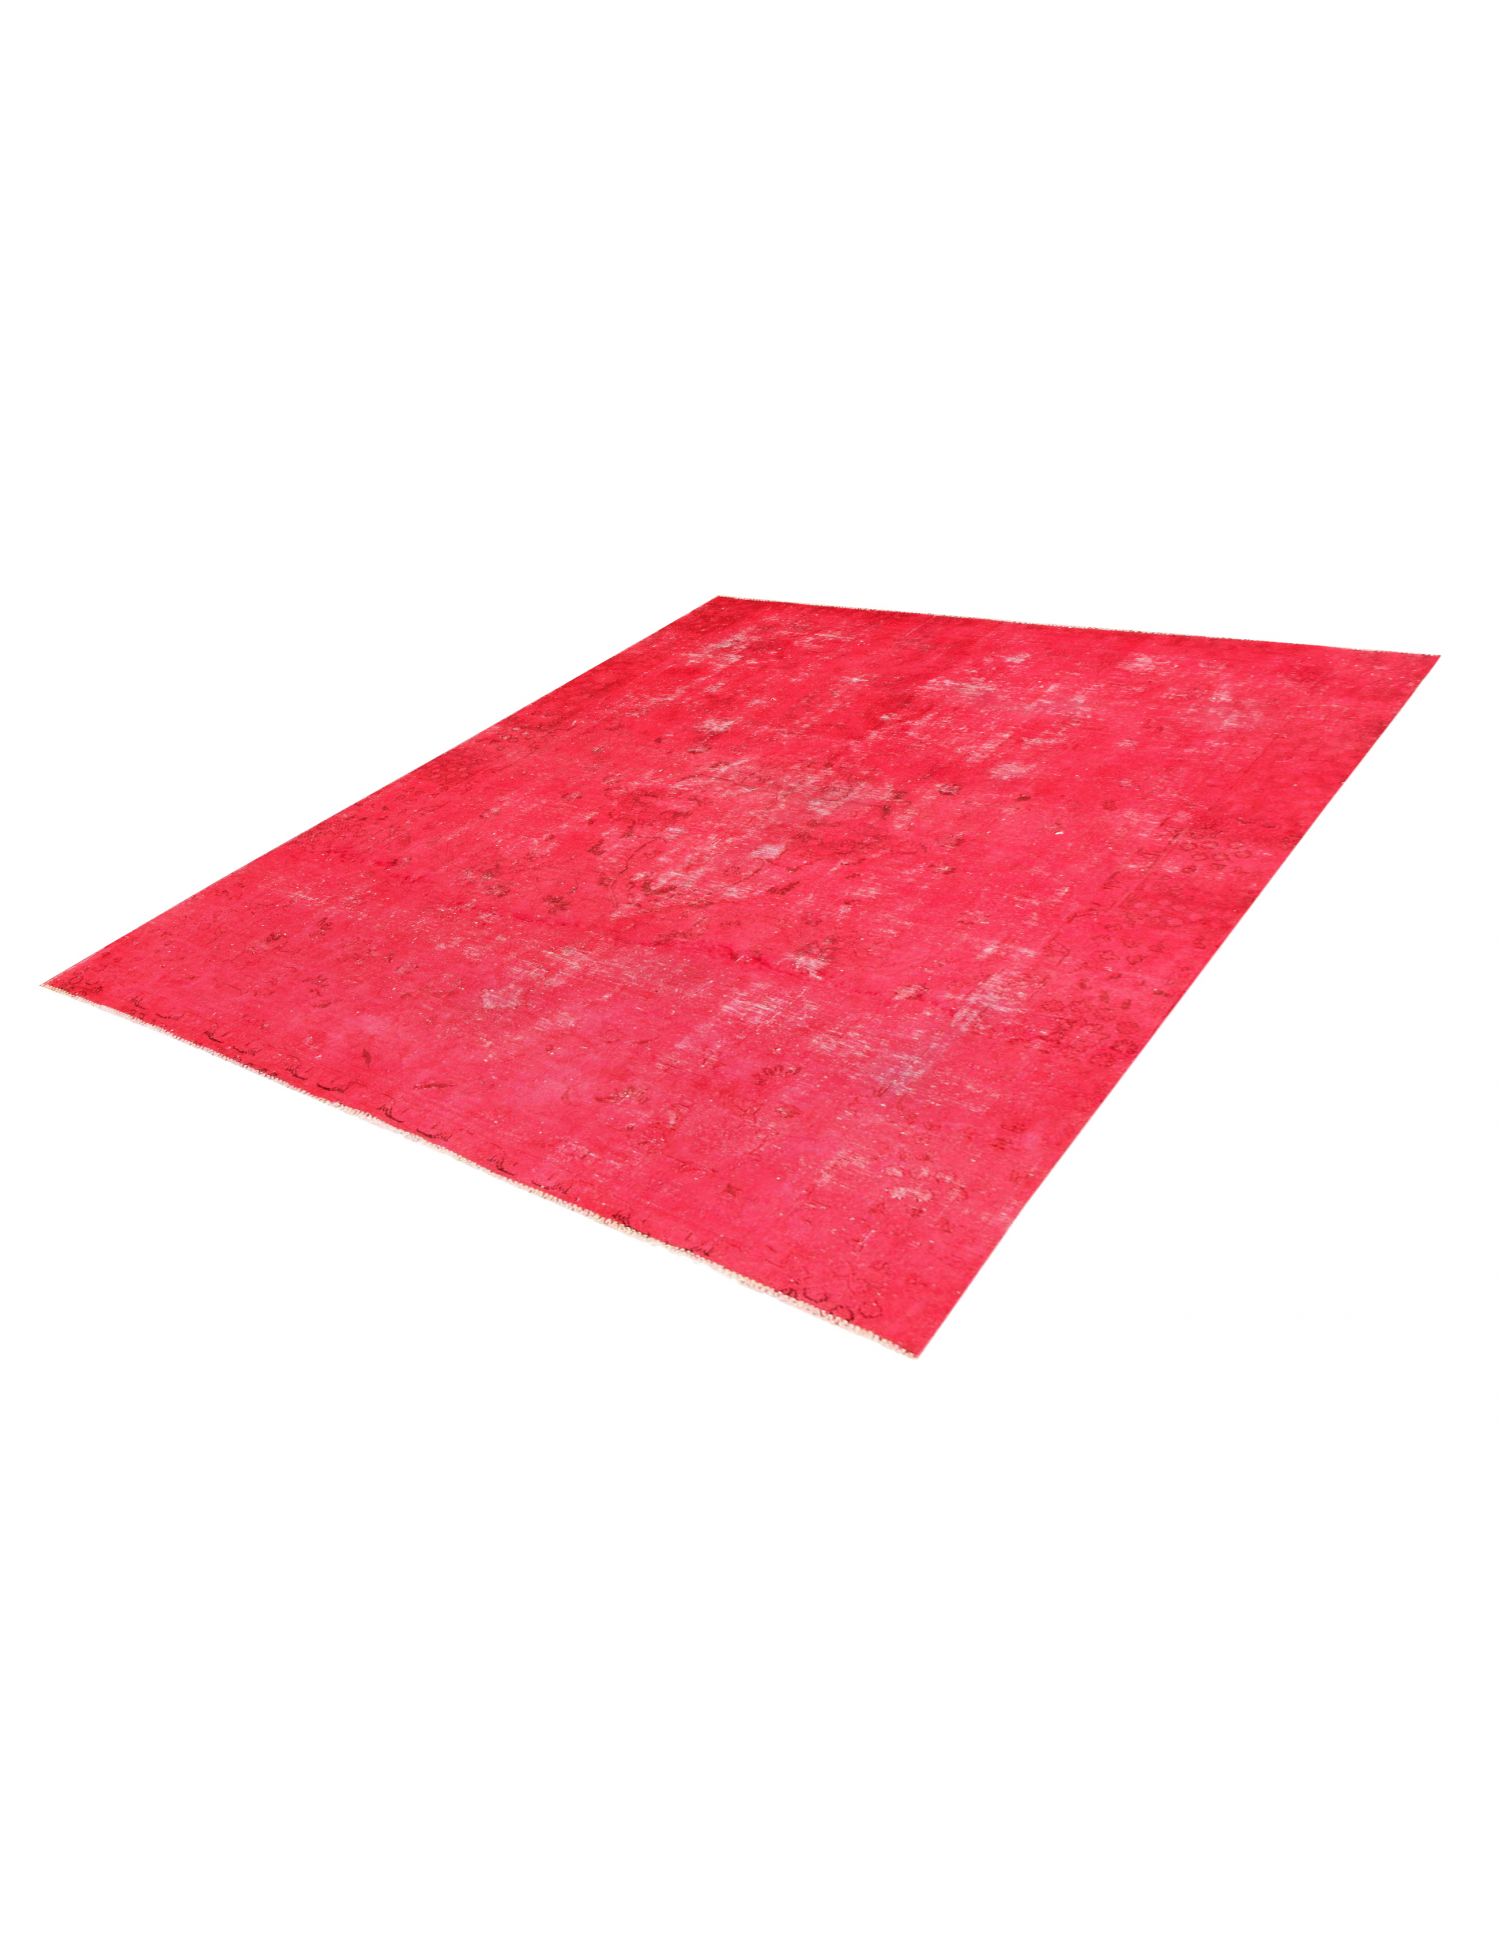 Persialaiset vintage matot  punainen <br/>228 x 228 cm